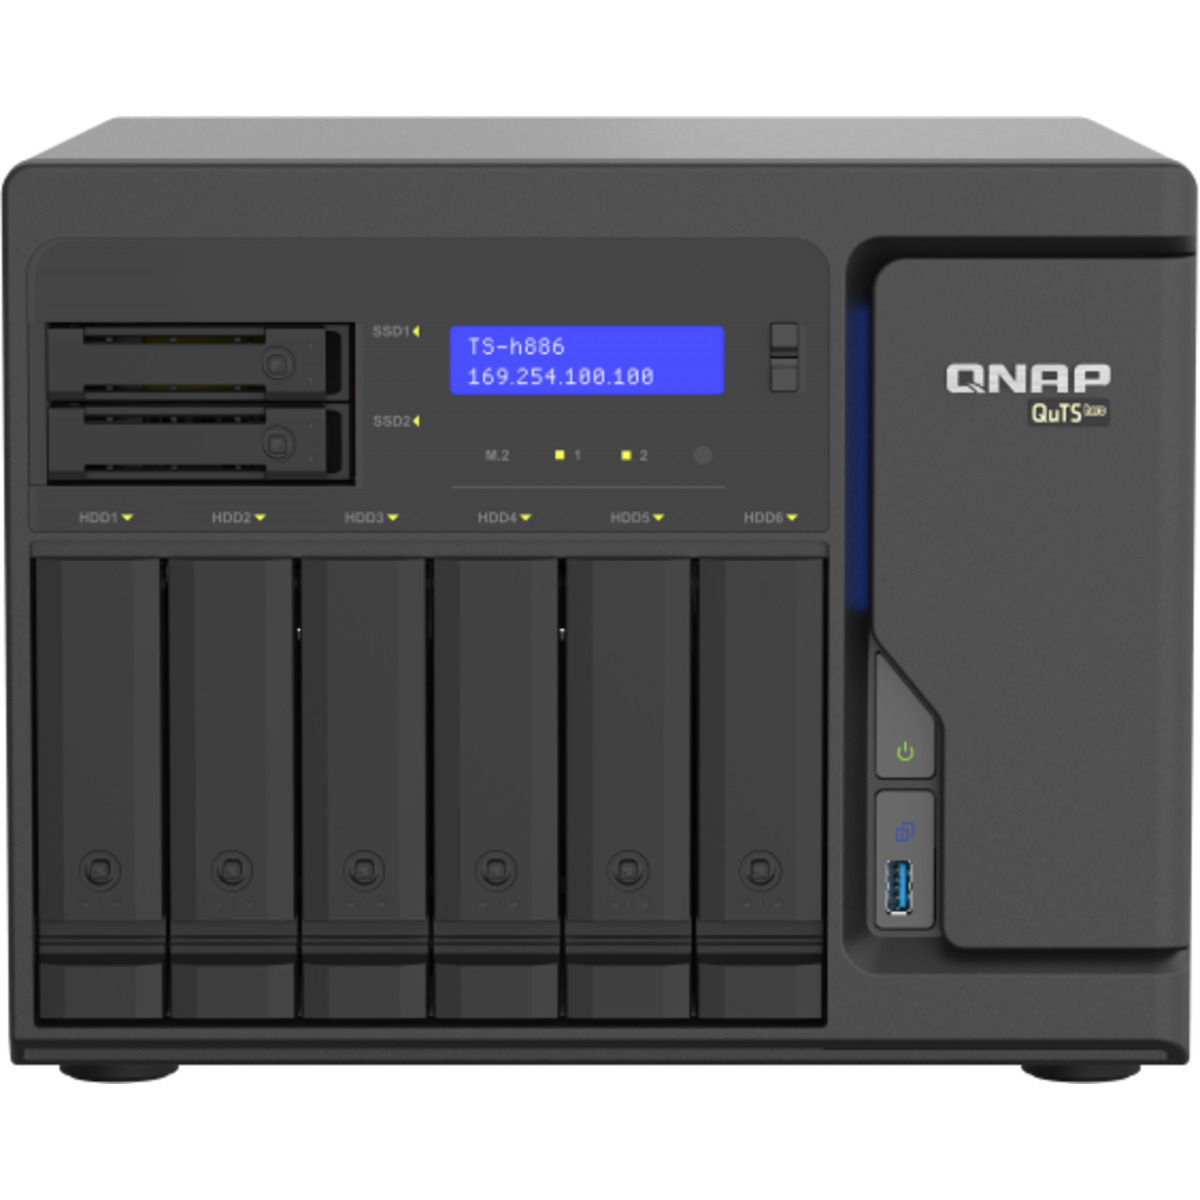 QNAP TS-h886 QuTS hero NAS 48tb 6+2-Bay Desktop Large Business / Enterprise NAS - Network Attached Storage Device 6x8tb Samsung 870 QVO MZ-77Q8T0 2.5 560/530MB/s SATA 6Gb/s SSD CONSUMER Class Drives Installed - Burn-In Tested TS-h886 QuTS hero NAS